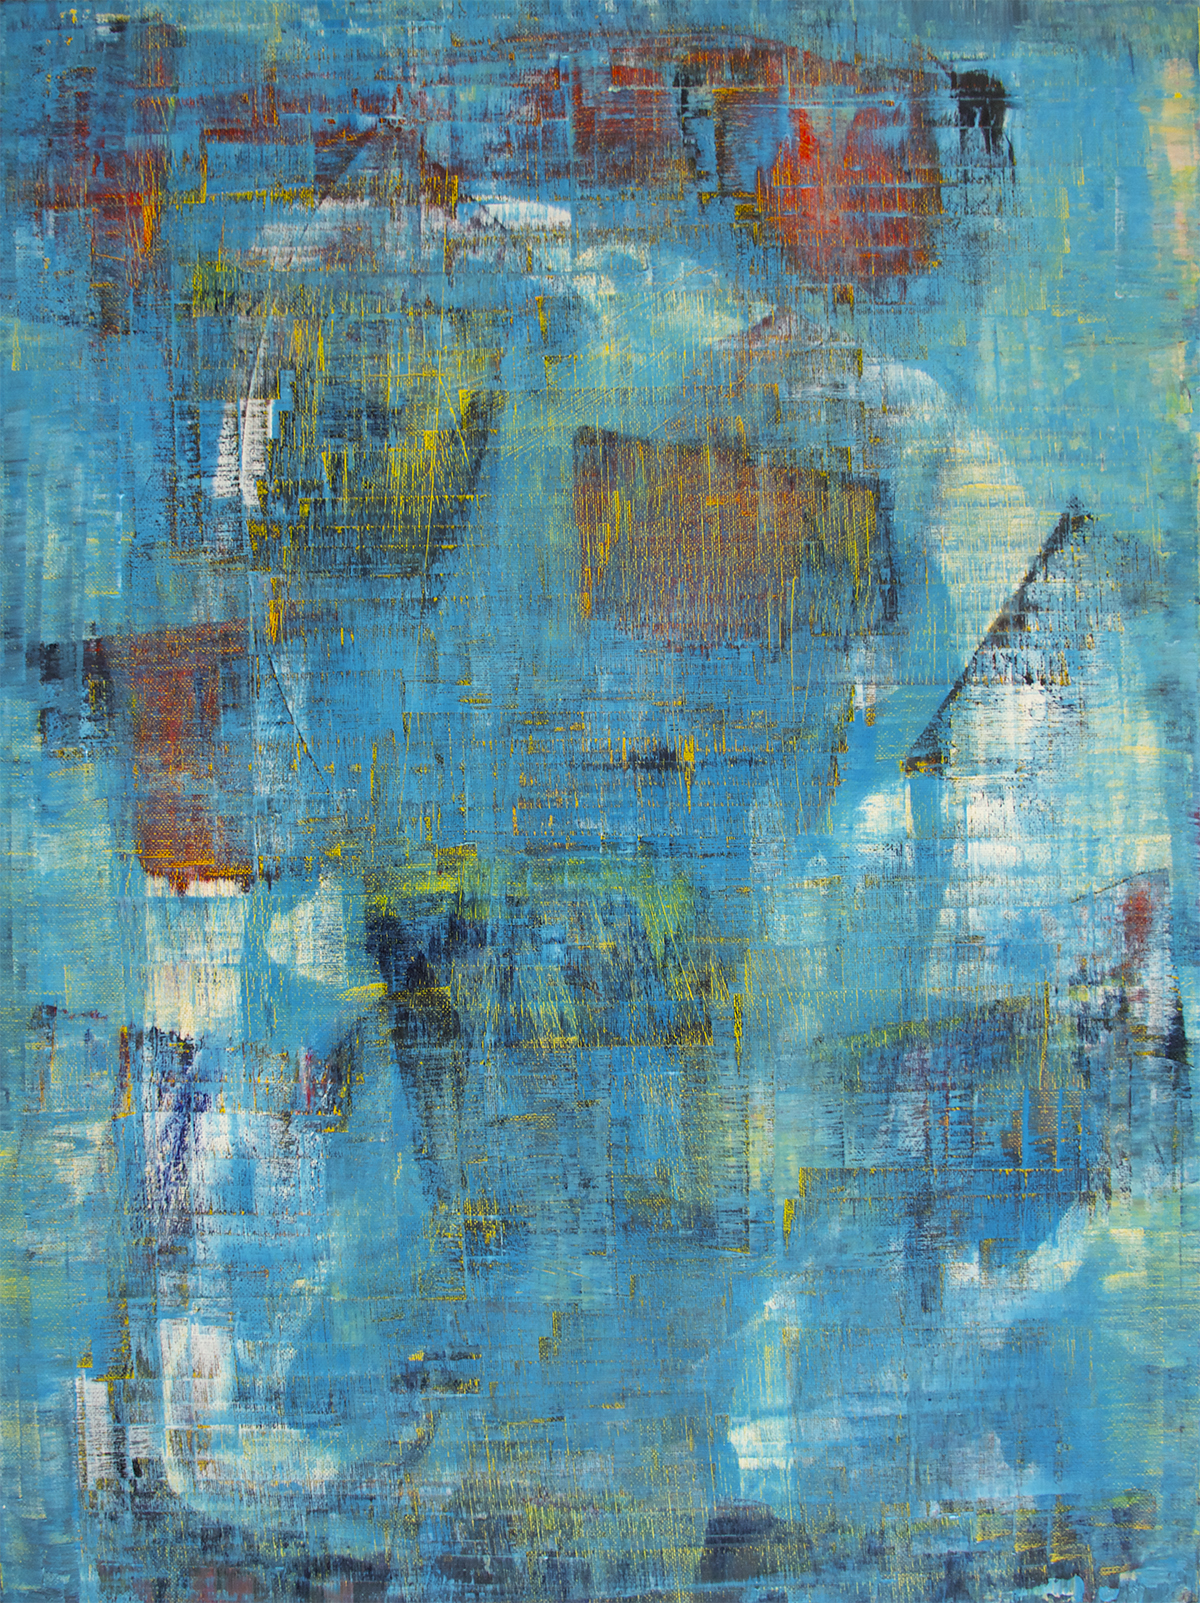 Vivid blue abstract painting